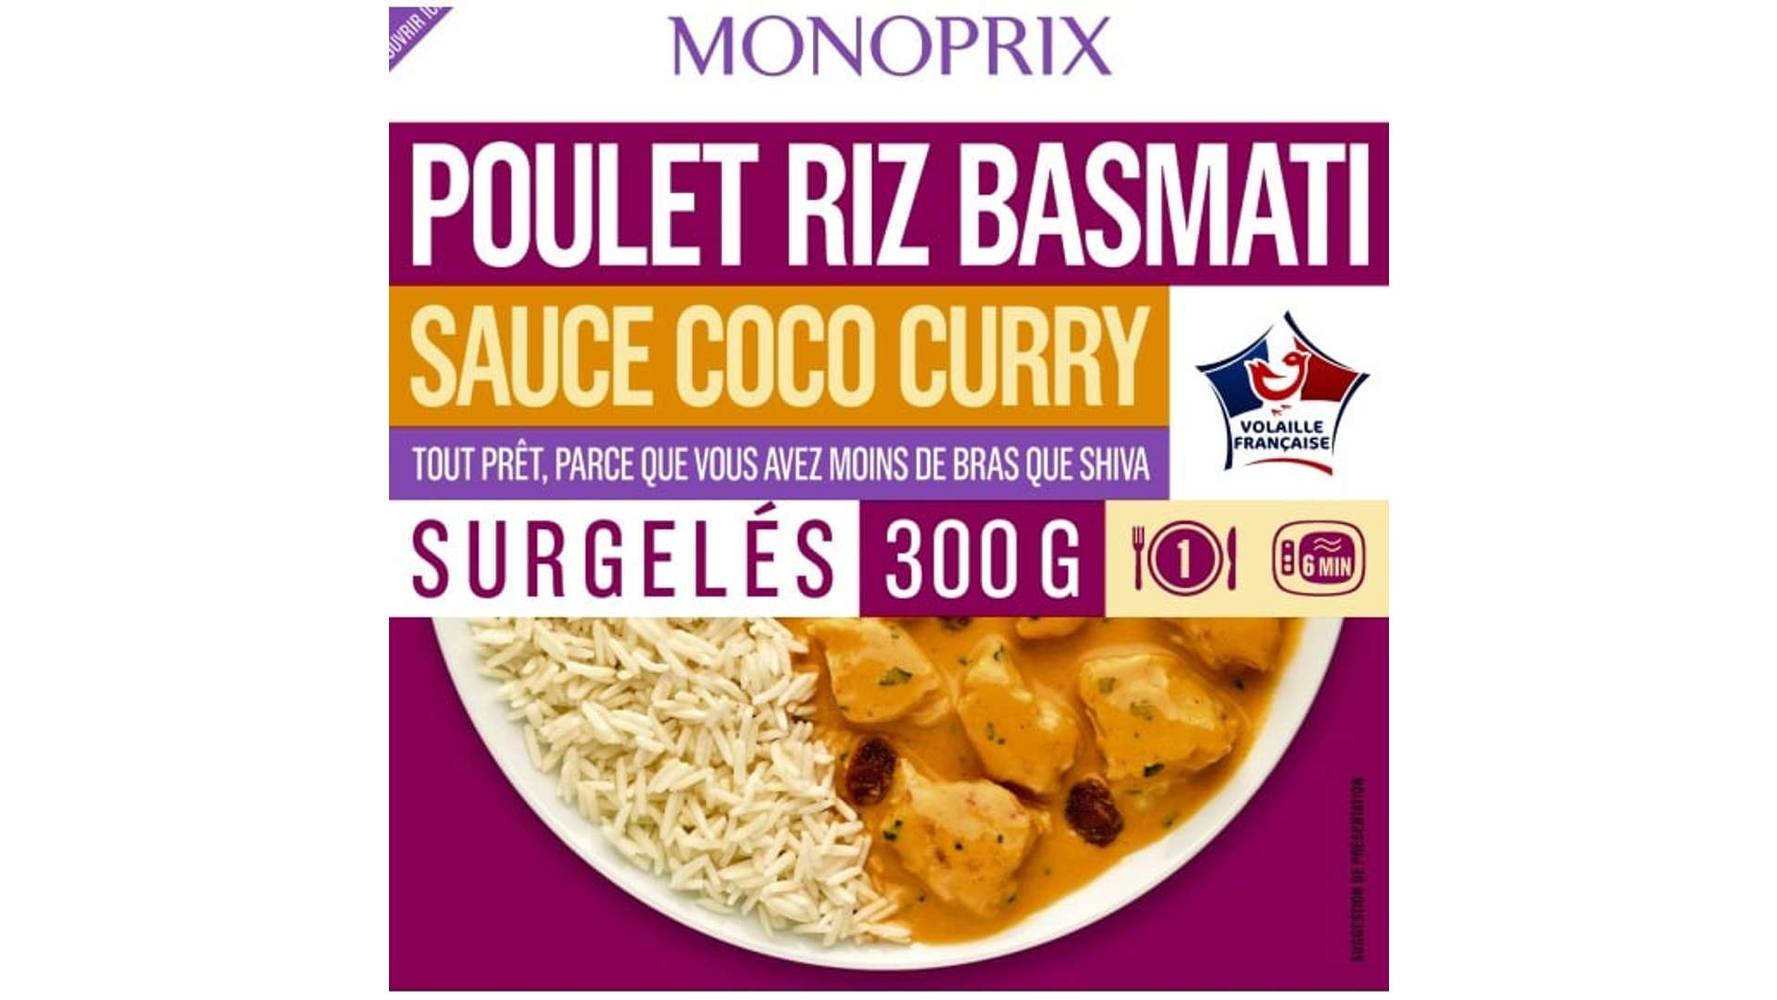 MONOPRIX Poulet riz basmati sauce coco curry La barquette de 300g